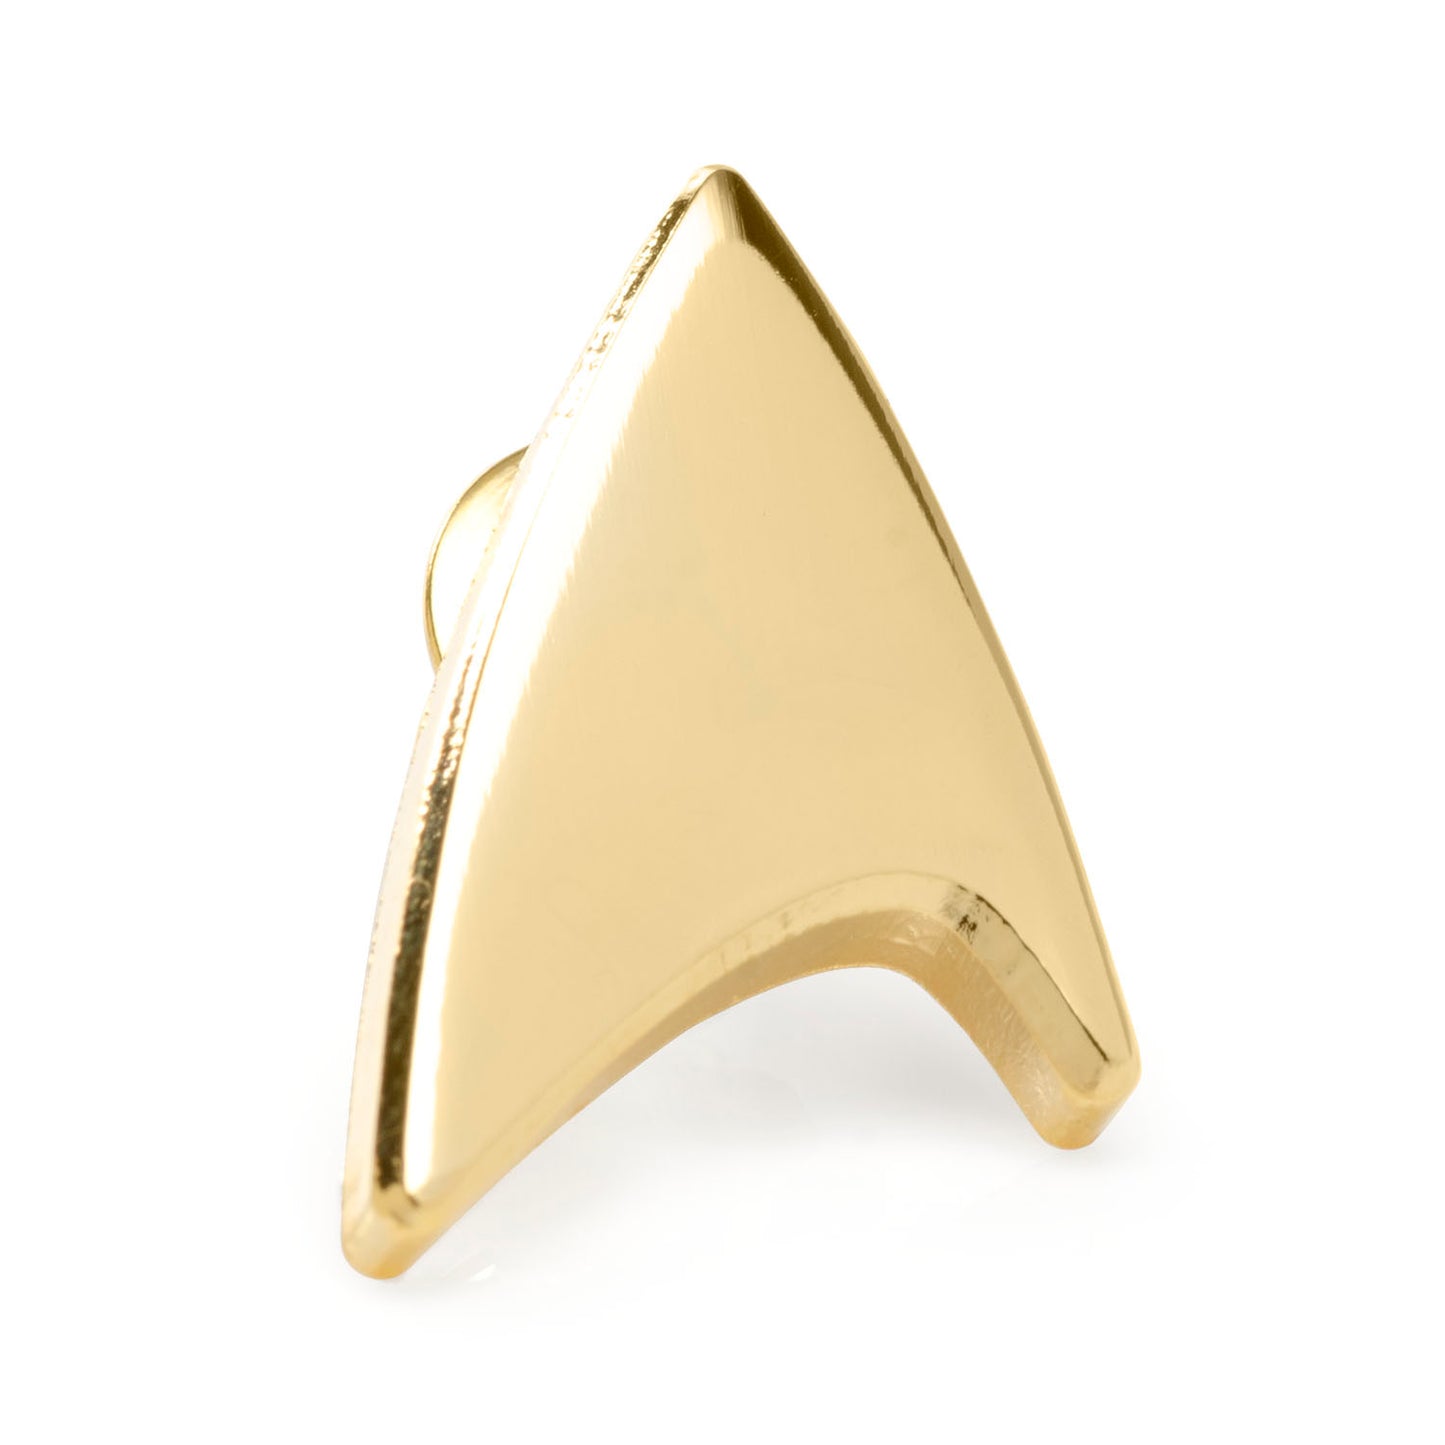 Star Trek Épingle de revers de l'écusson Delta en or